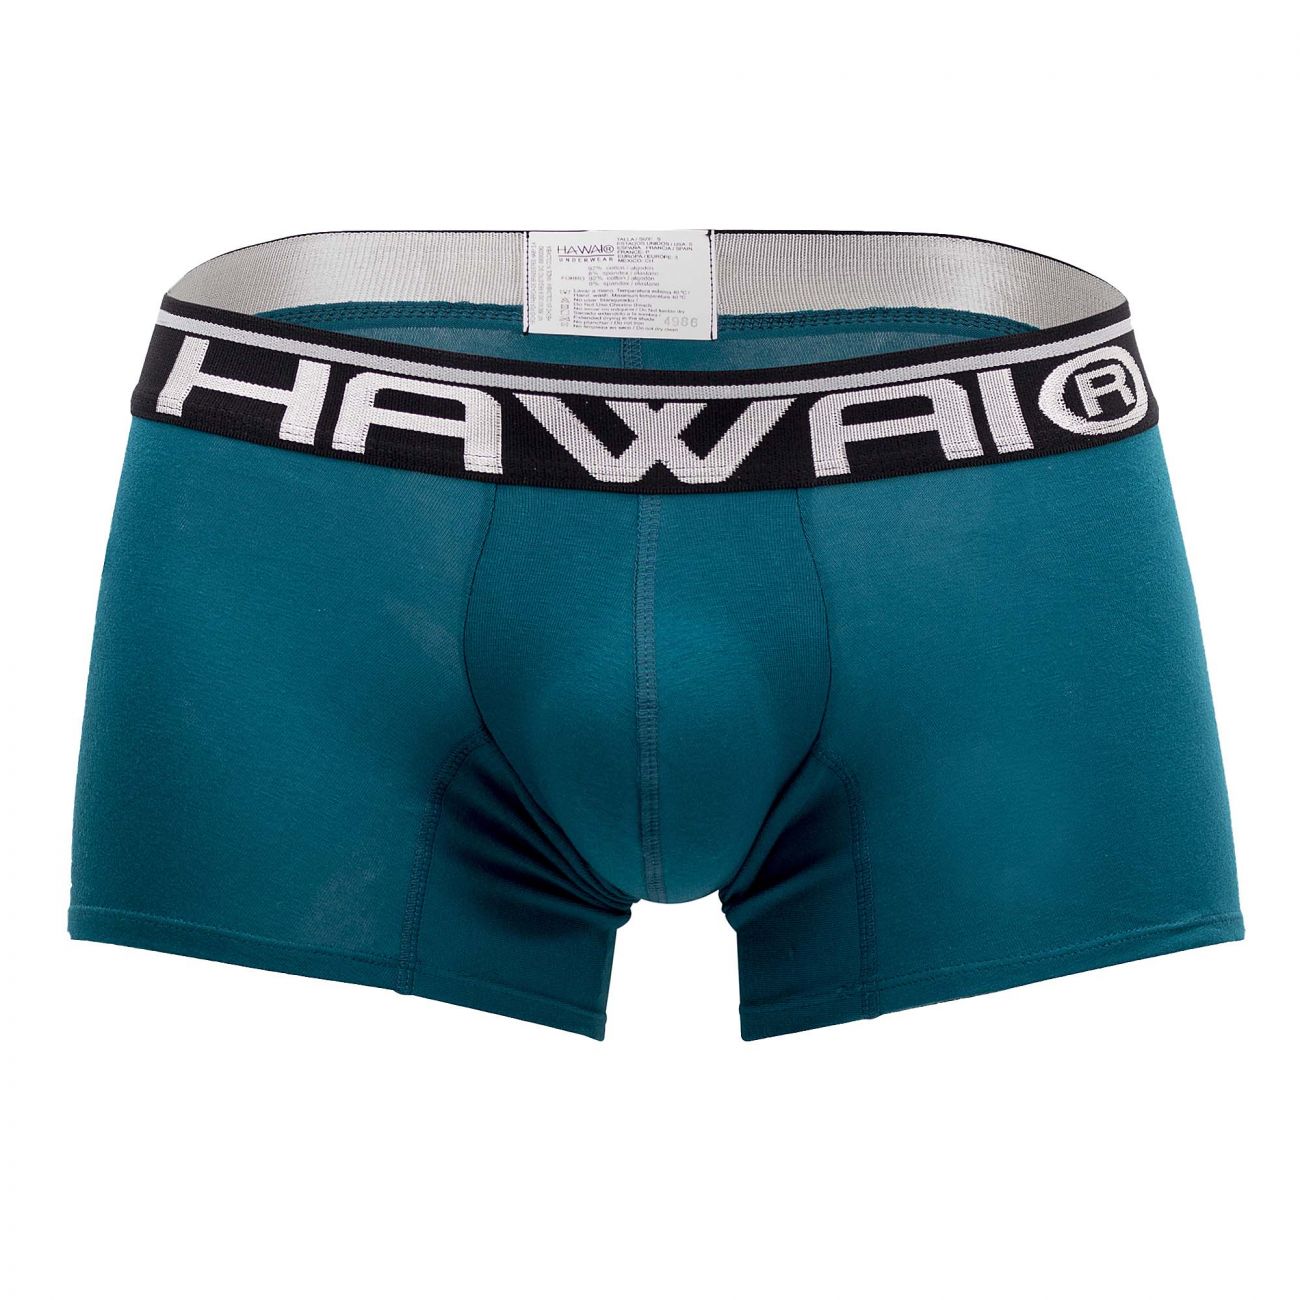 HAWAI Solid Athletic Trunks